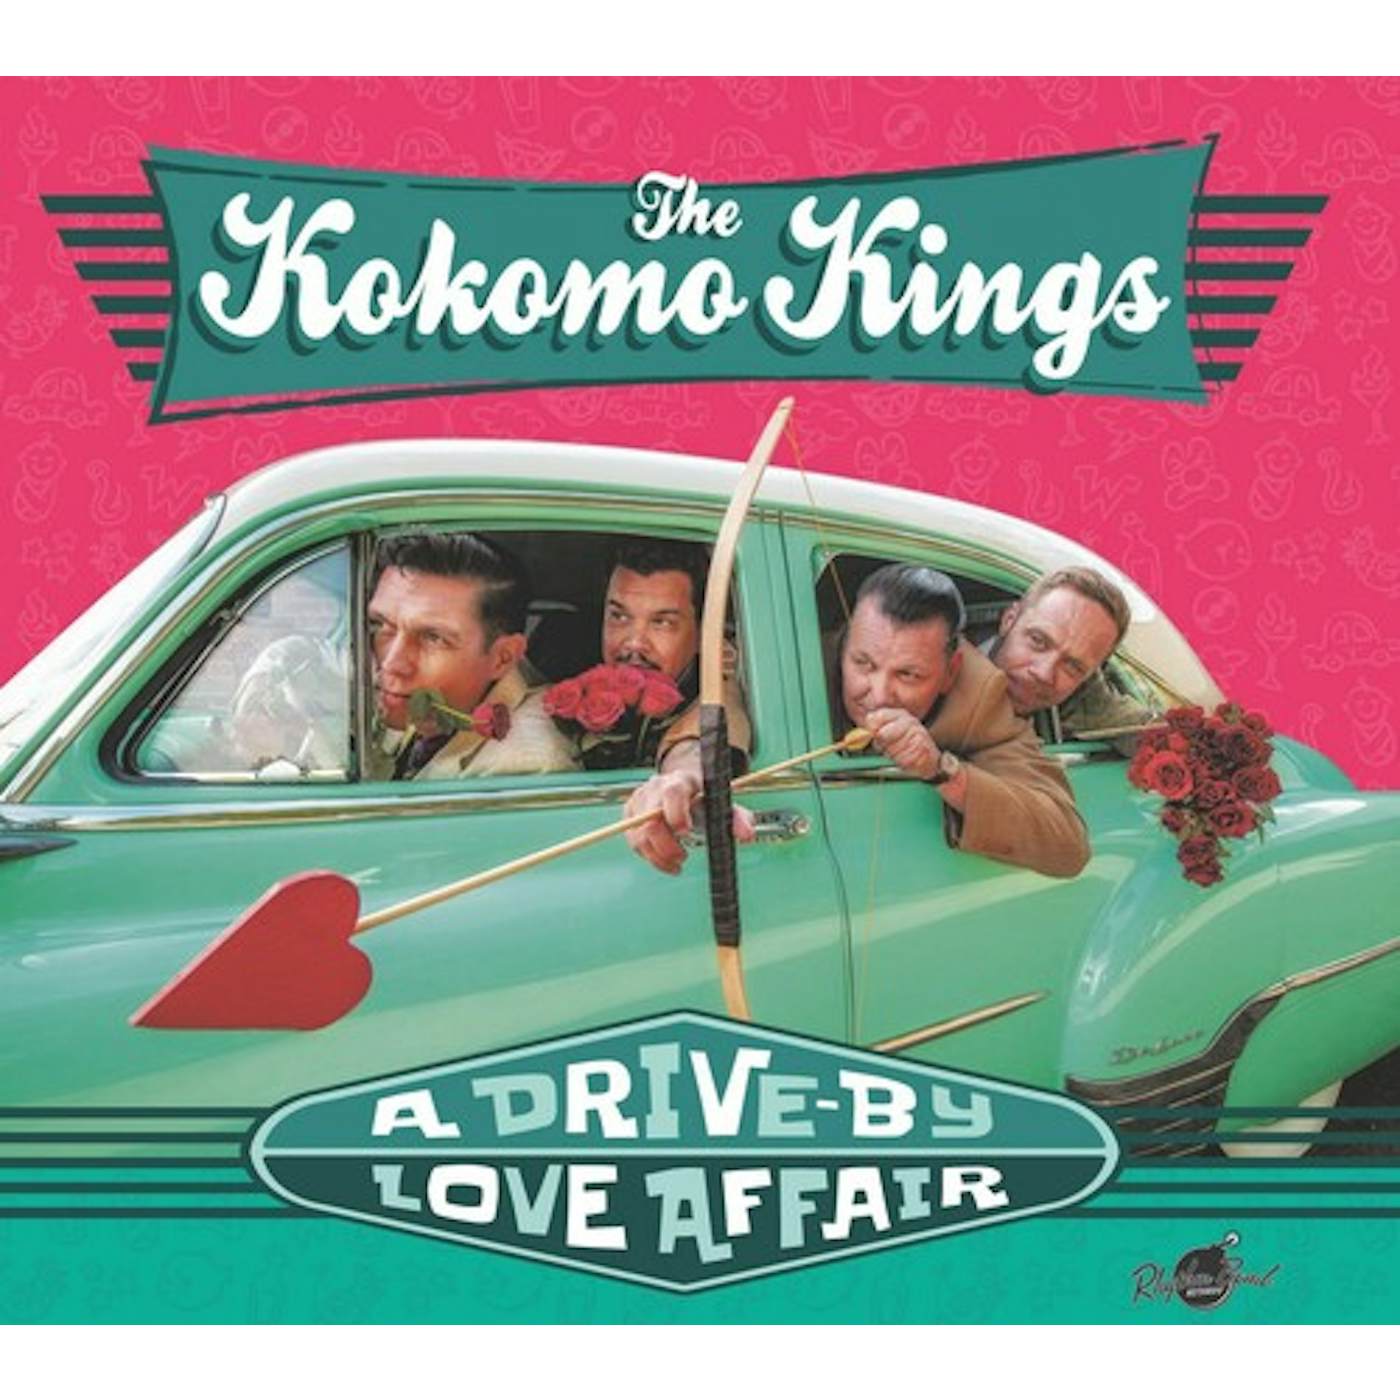 The Kokomo Kings DRIVE-BY LOVE AFFAIR CD